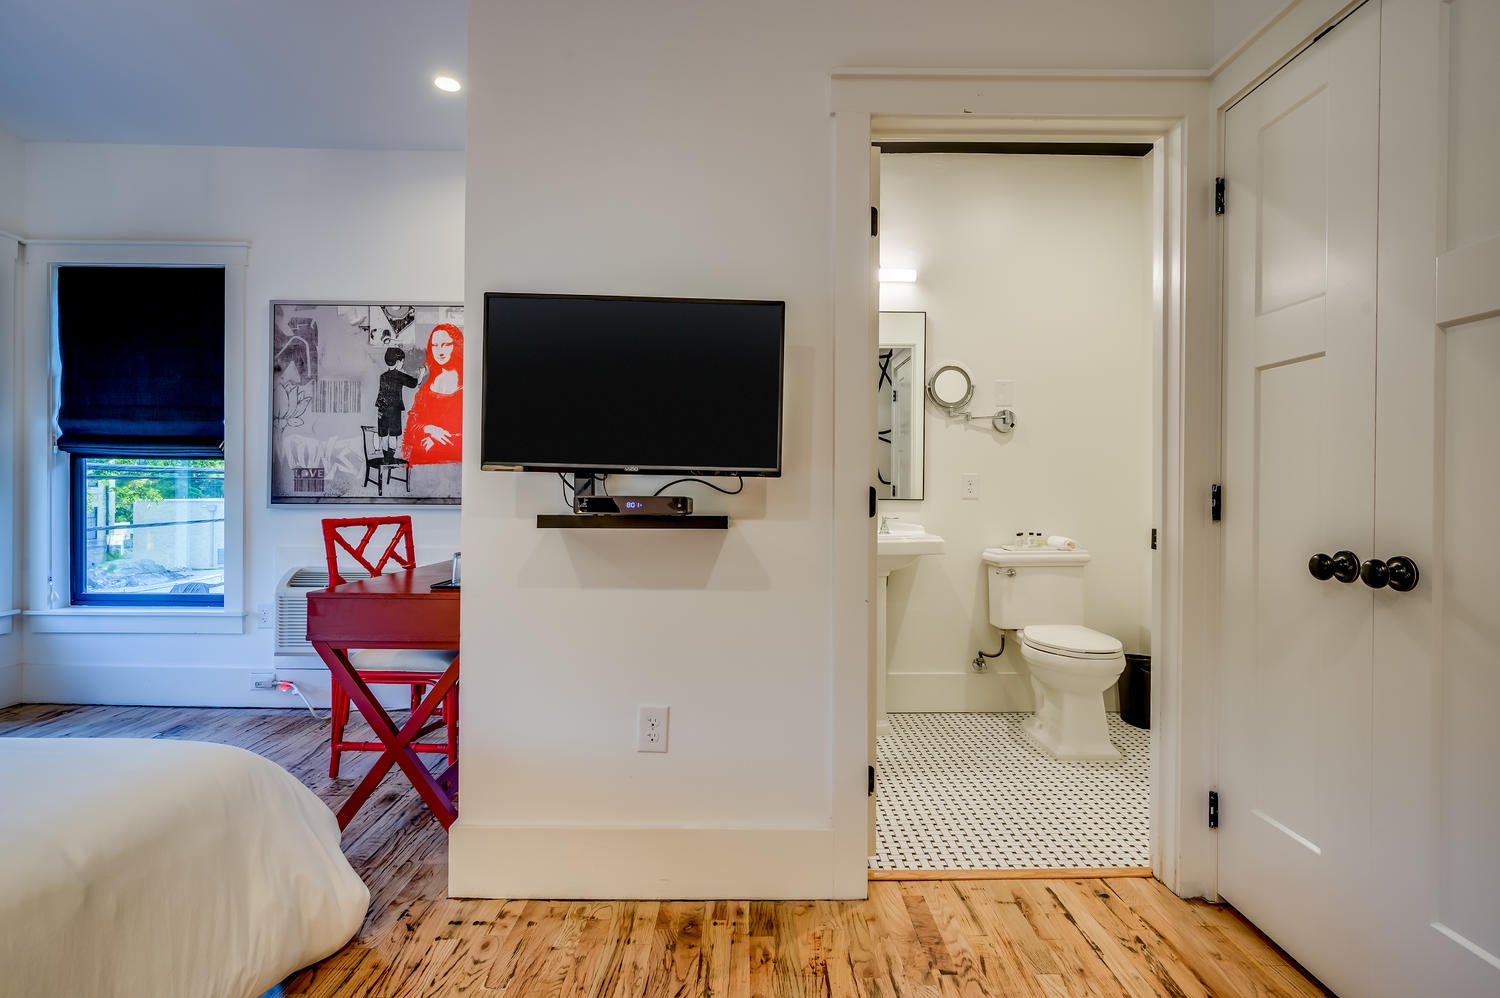 Suite 201 – The 2nd Floor Red, White & Black Suite boasts a Casper Queen Bed, Smart TV, and En Suite Bathroom